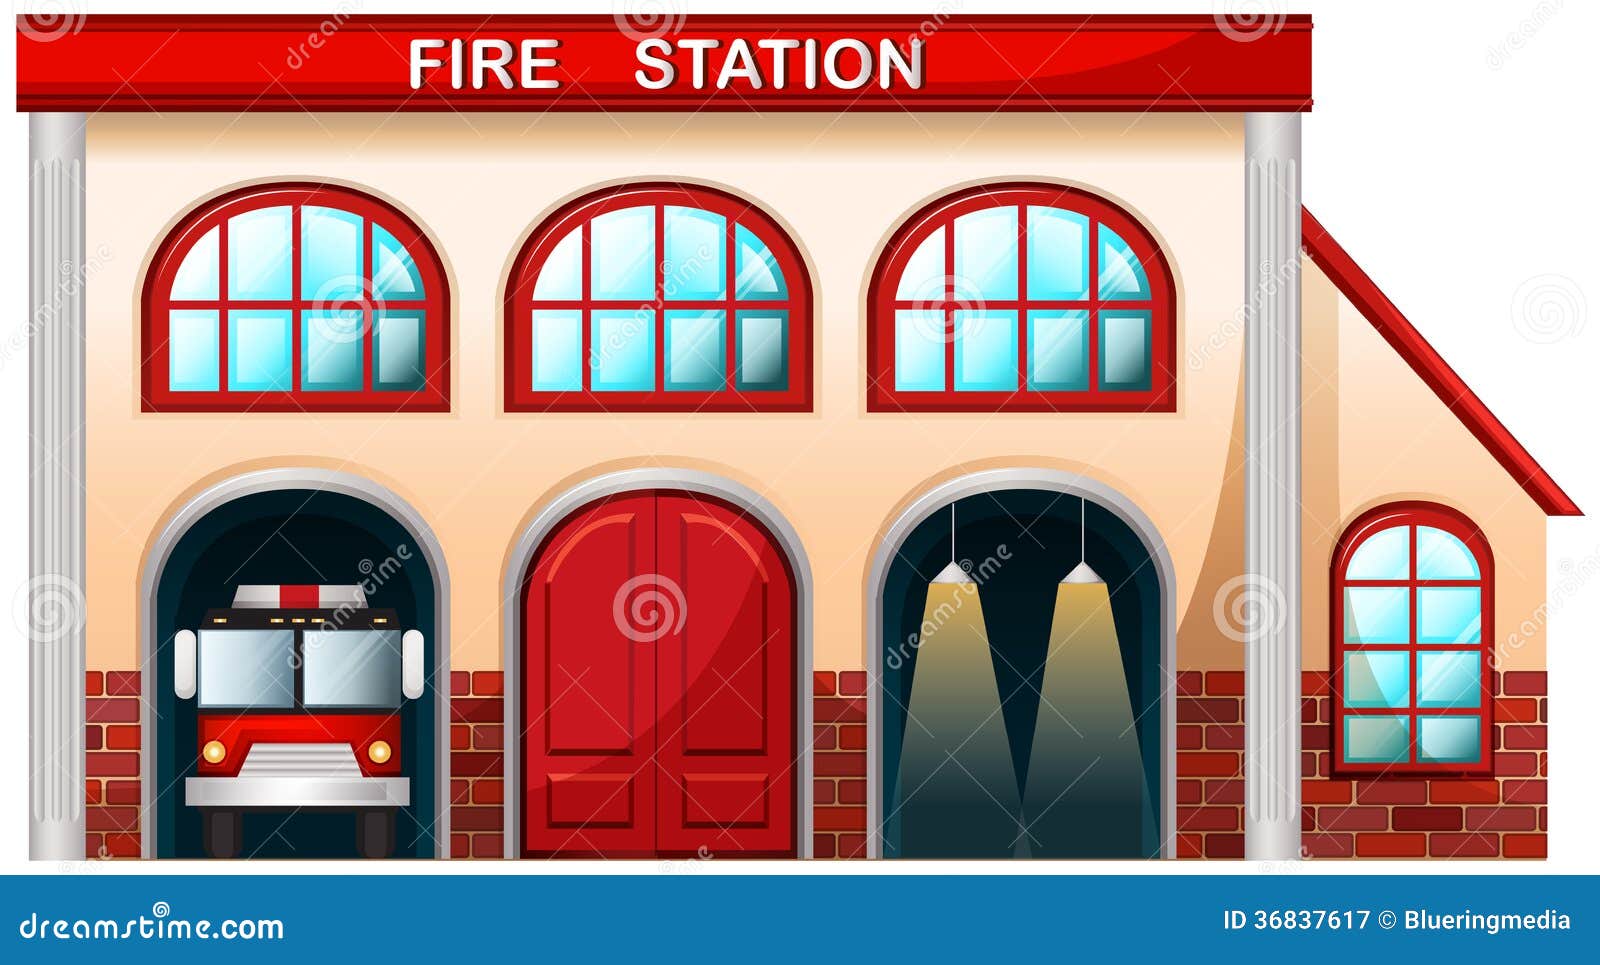 fire station clip art - photo #40